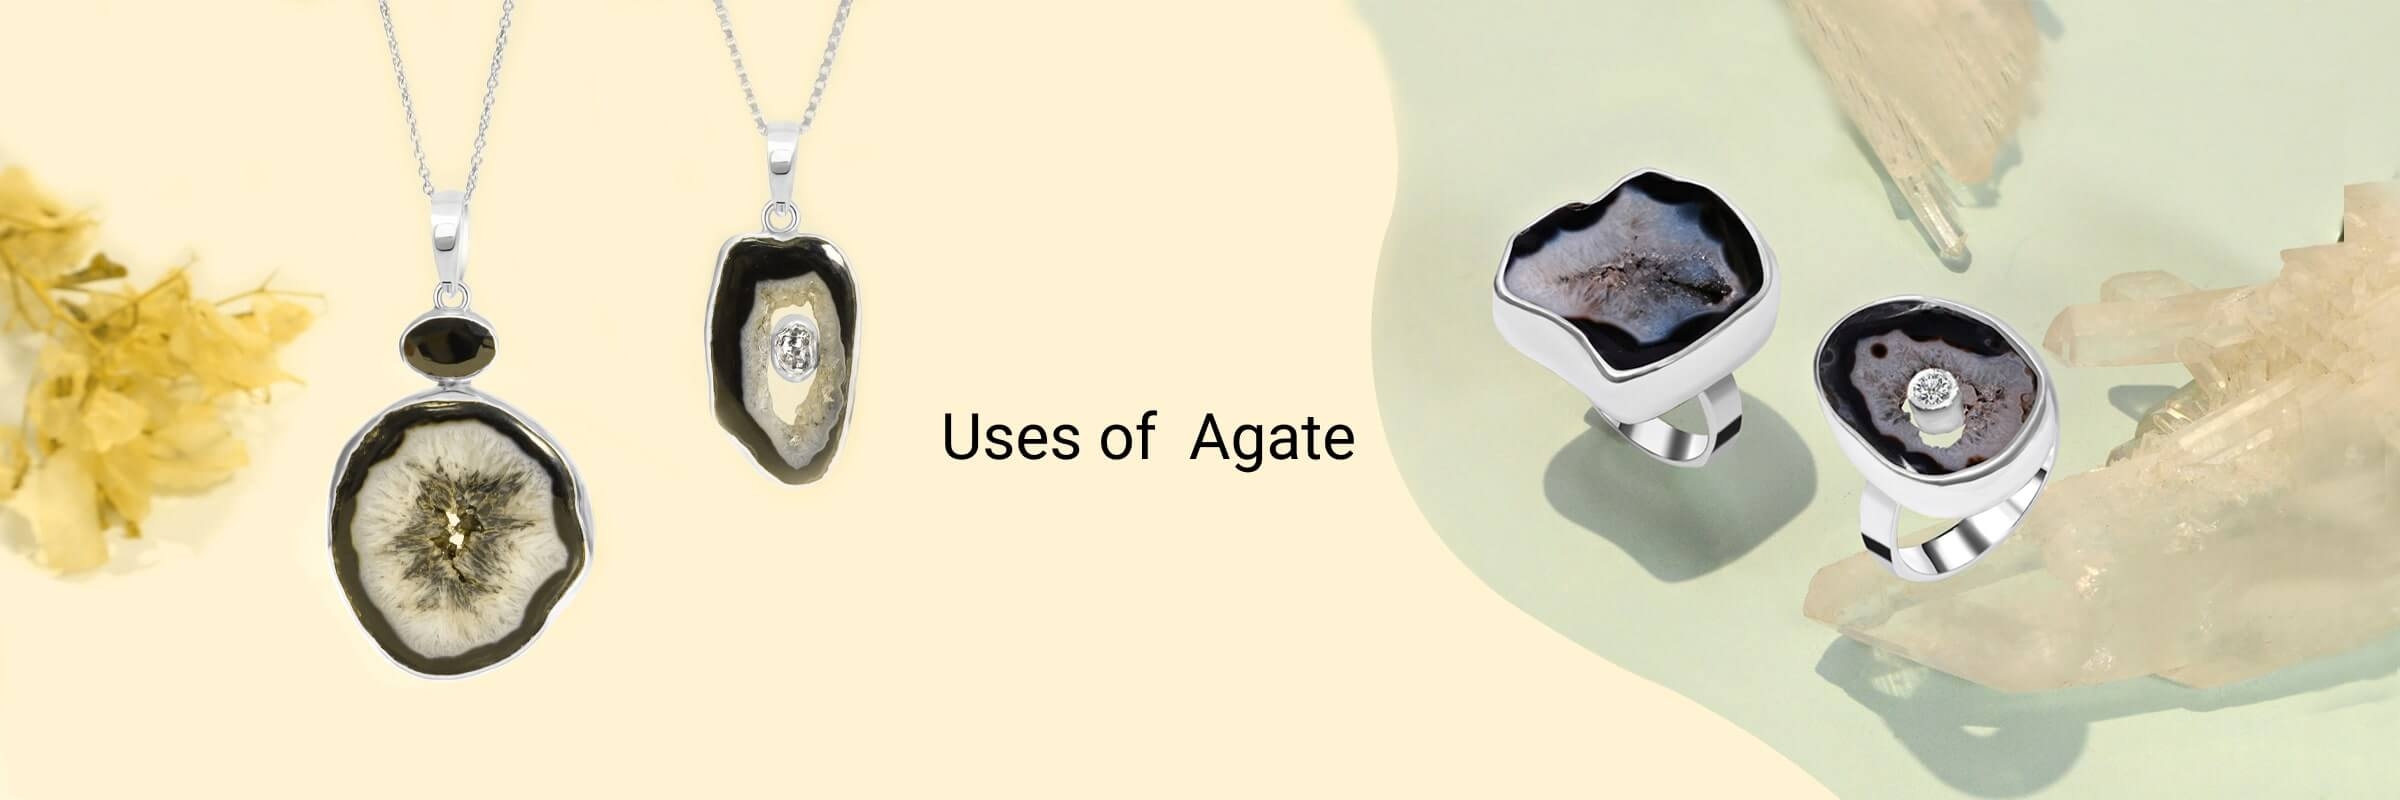 Agate: Uses